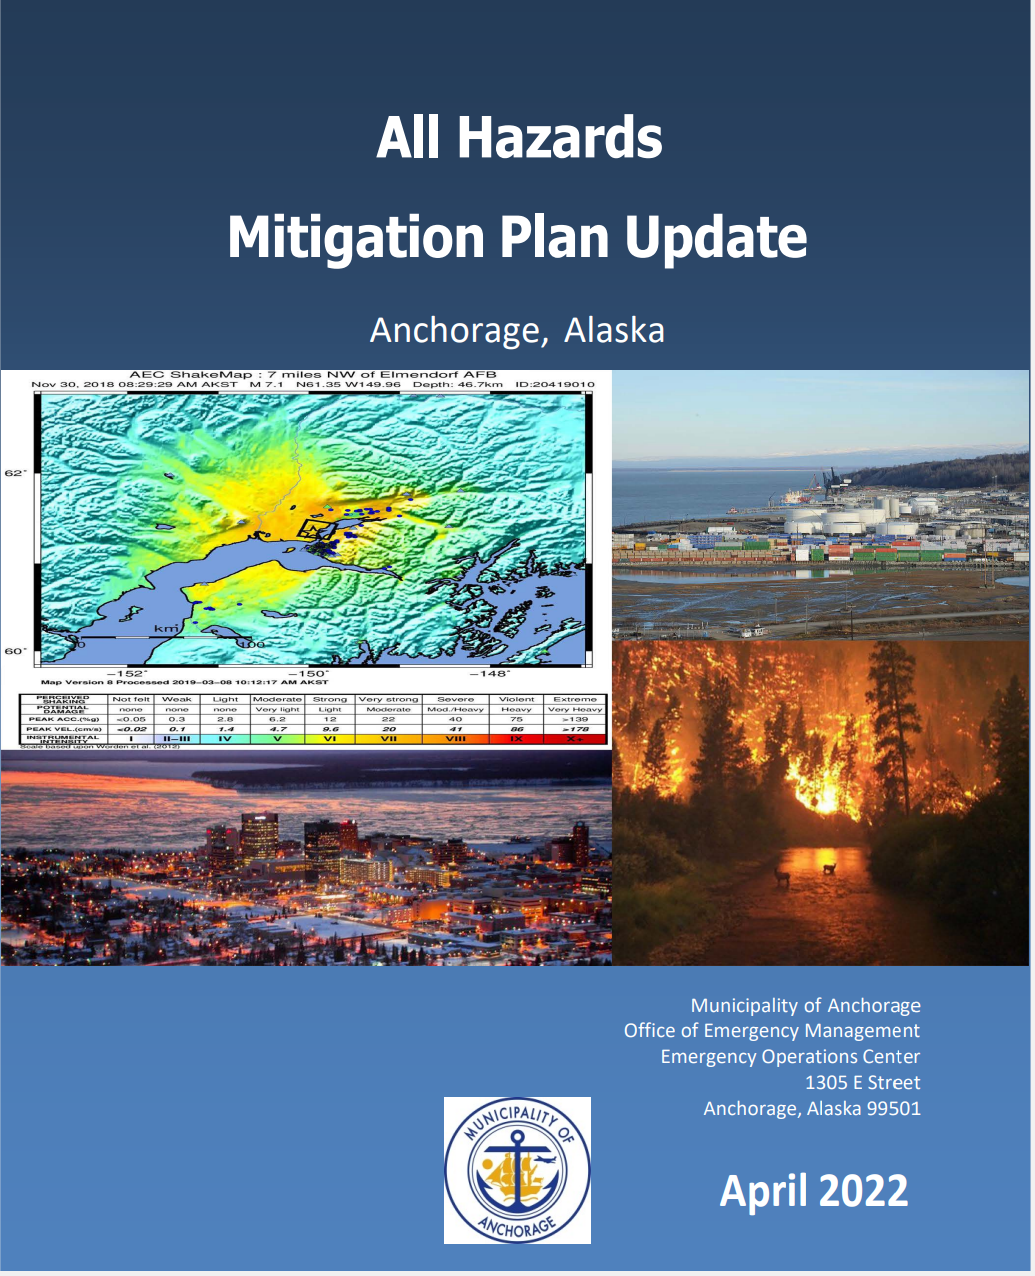 All Hazards Mitigation Plan Cover